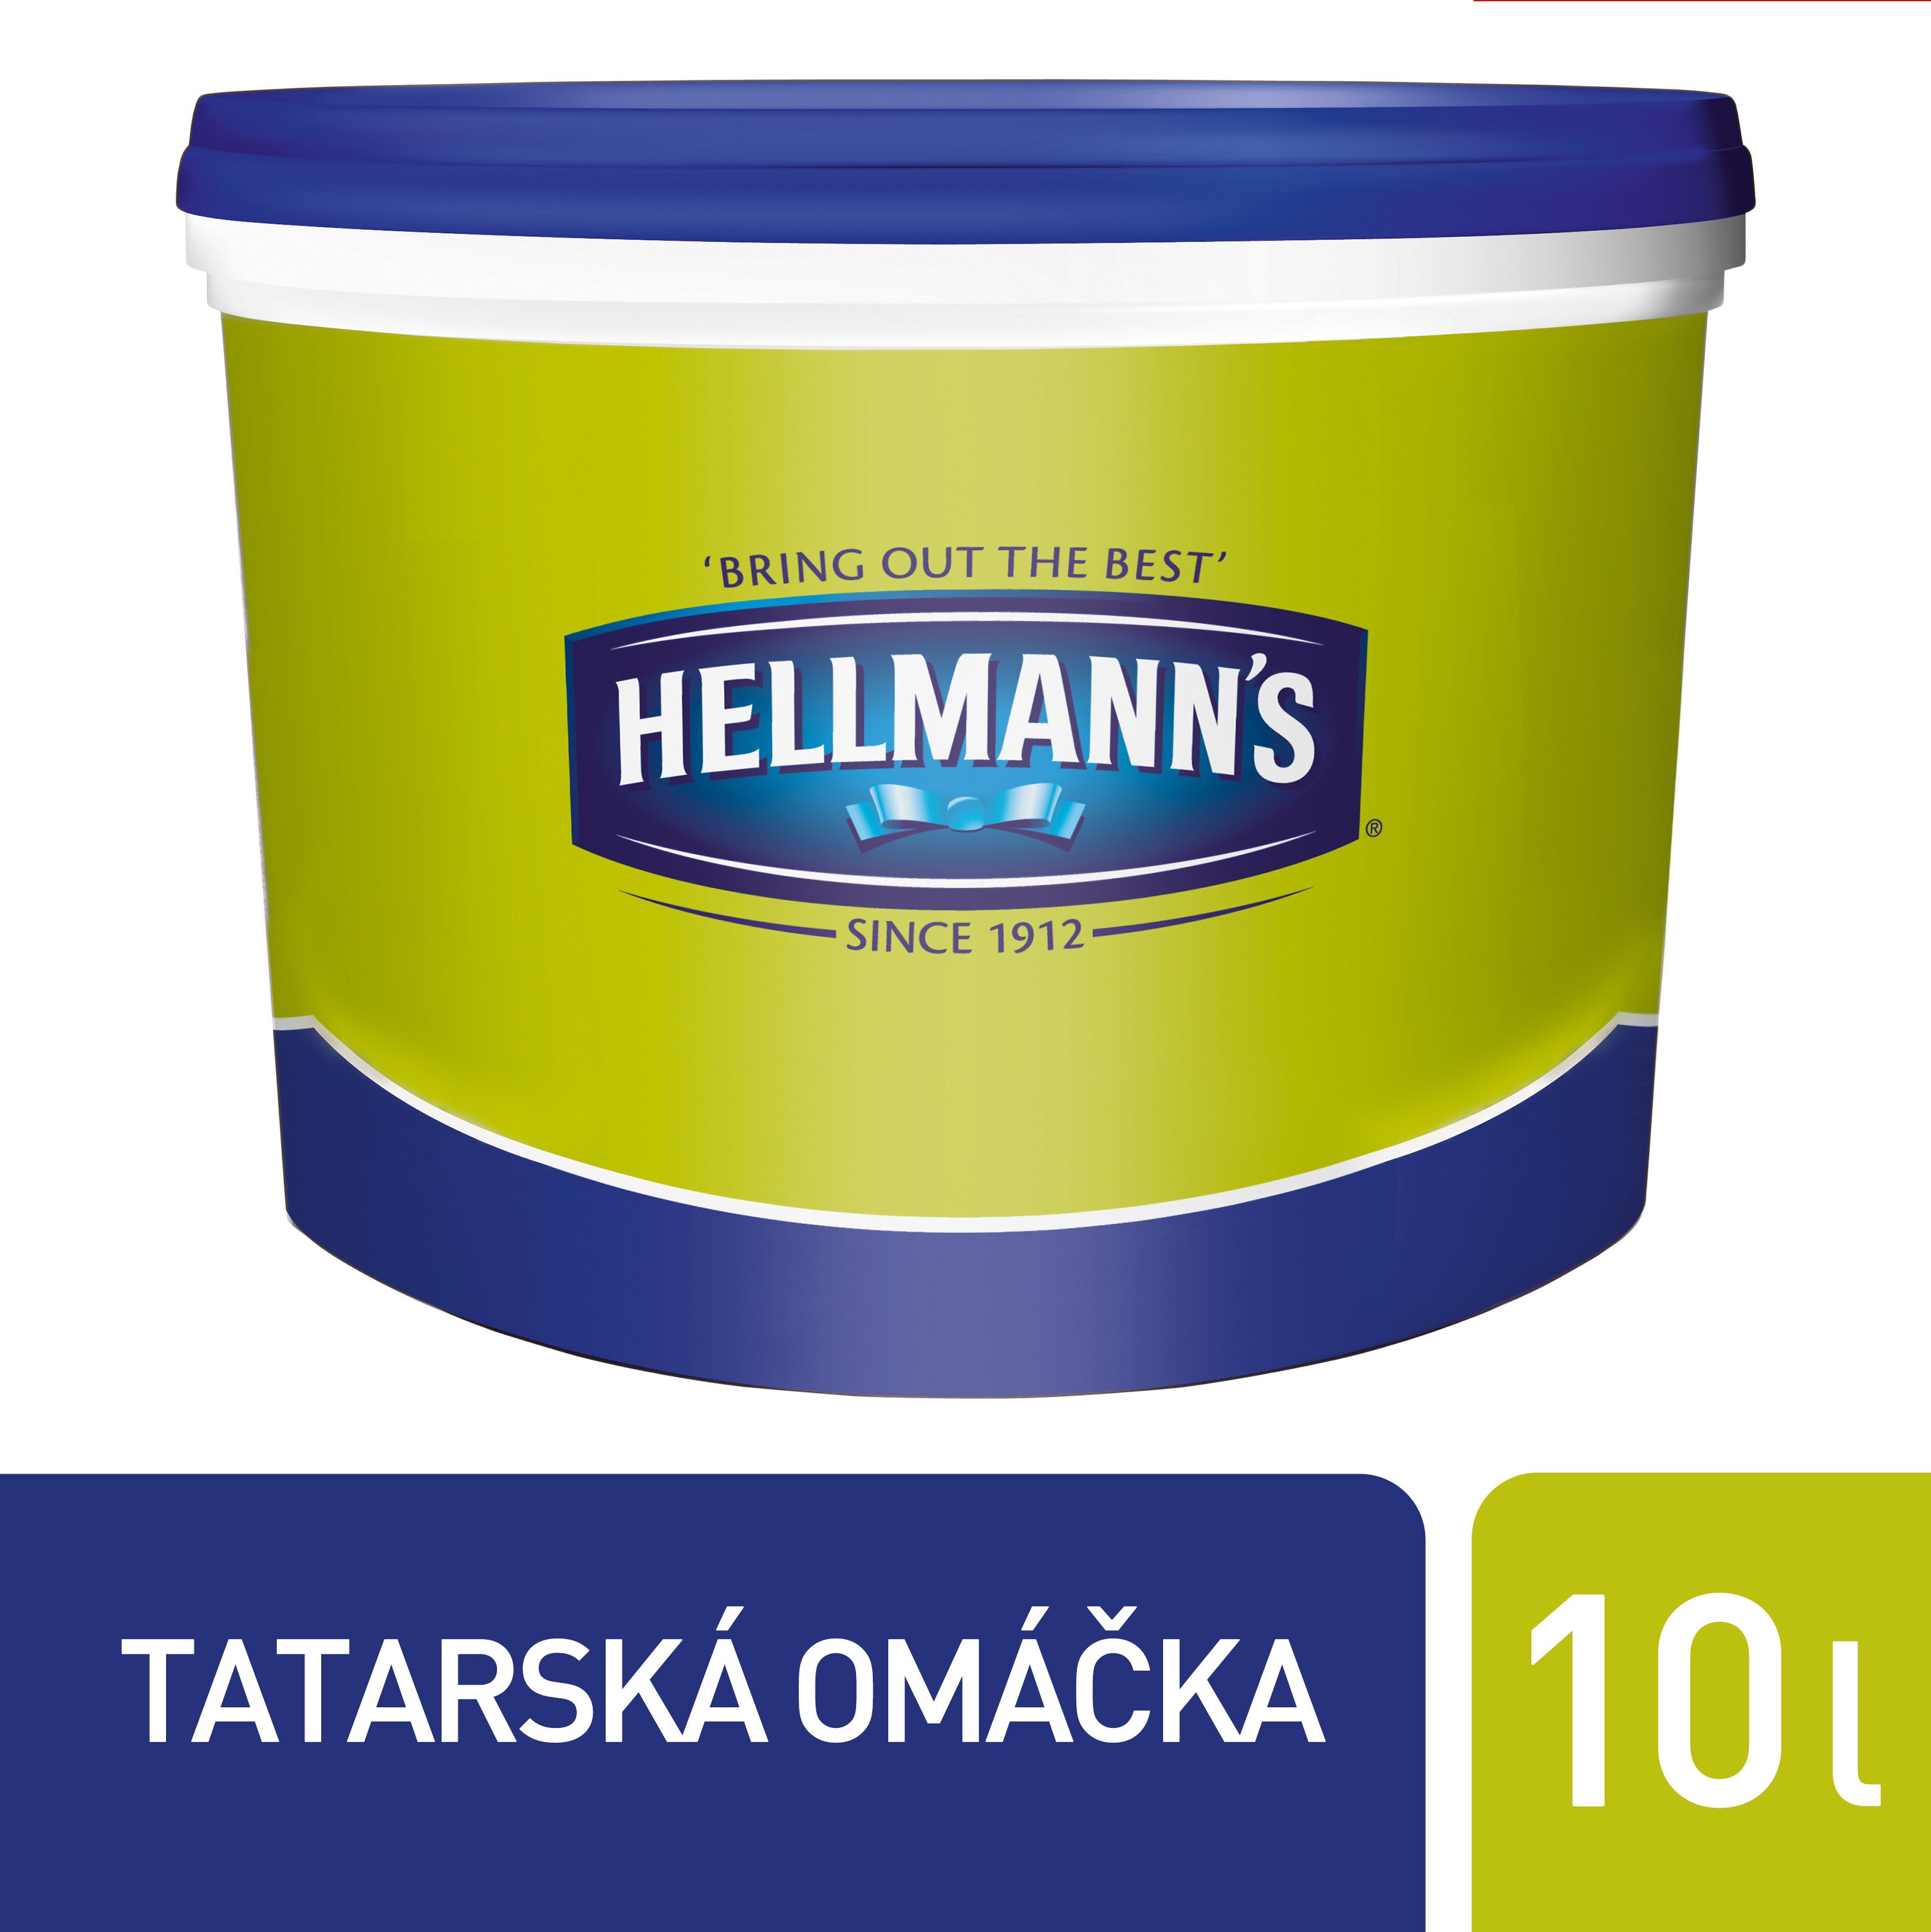 Hellmann's Tatarská omáčka 10 l